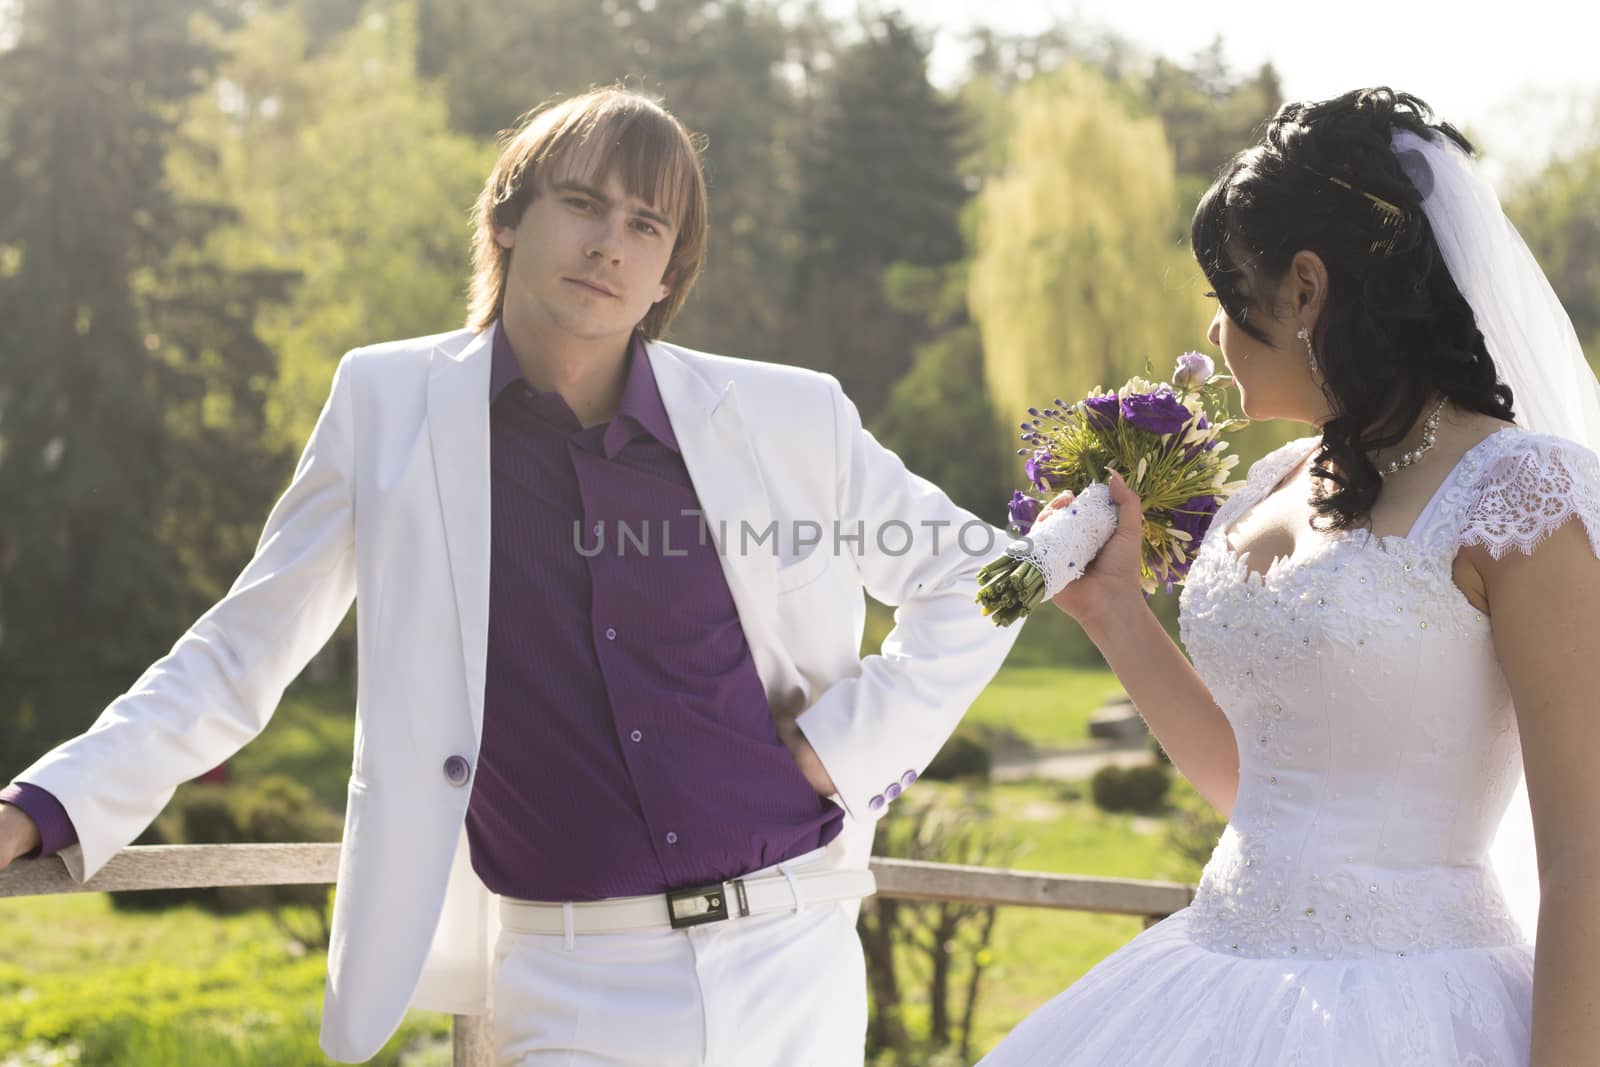 Elegant bride and groom posing together outdoors on a wedding da by serhii_lohvyniuk